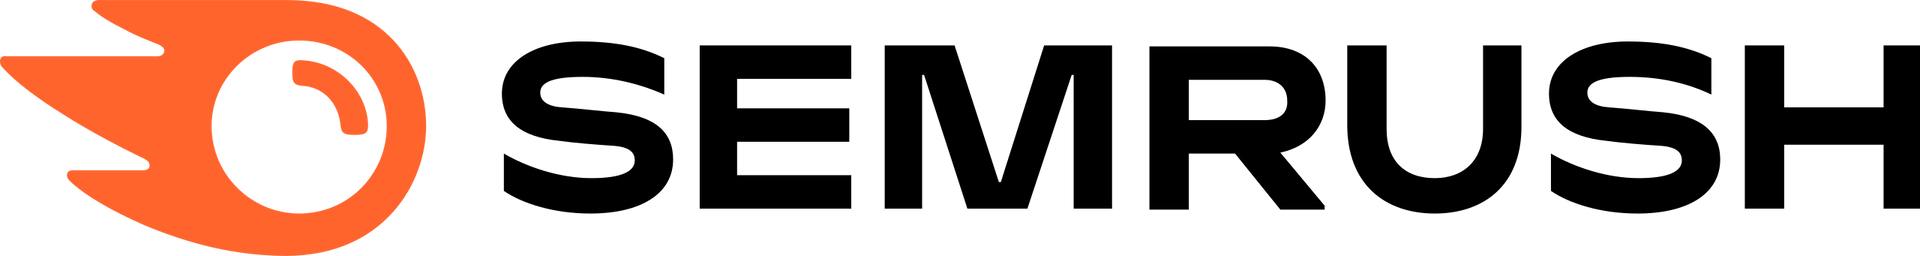 a black and orange logo for semrush on a white background